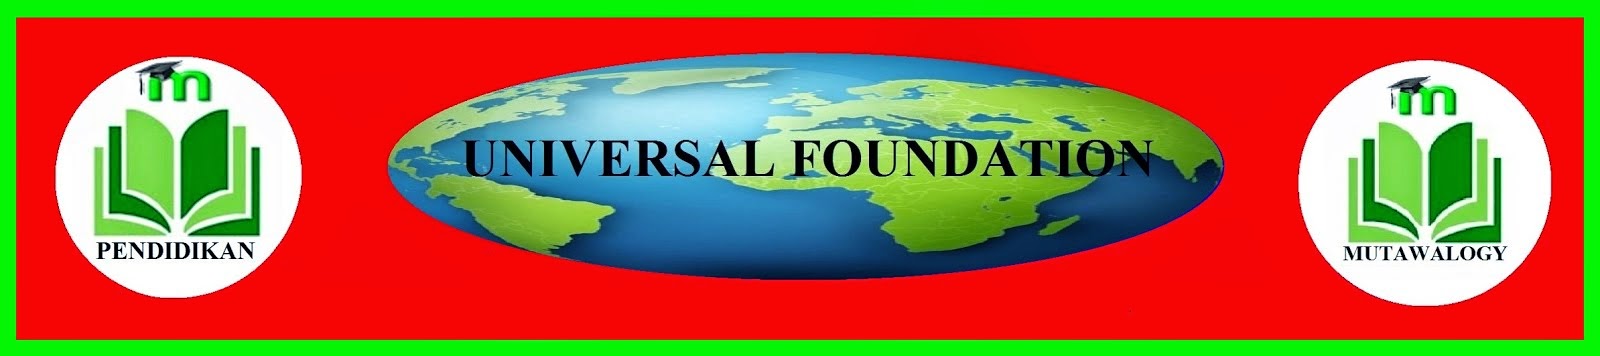 UNIVERSAL  FOUNDATION